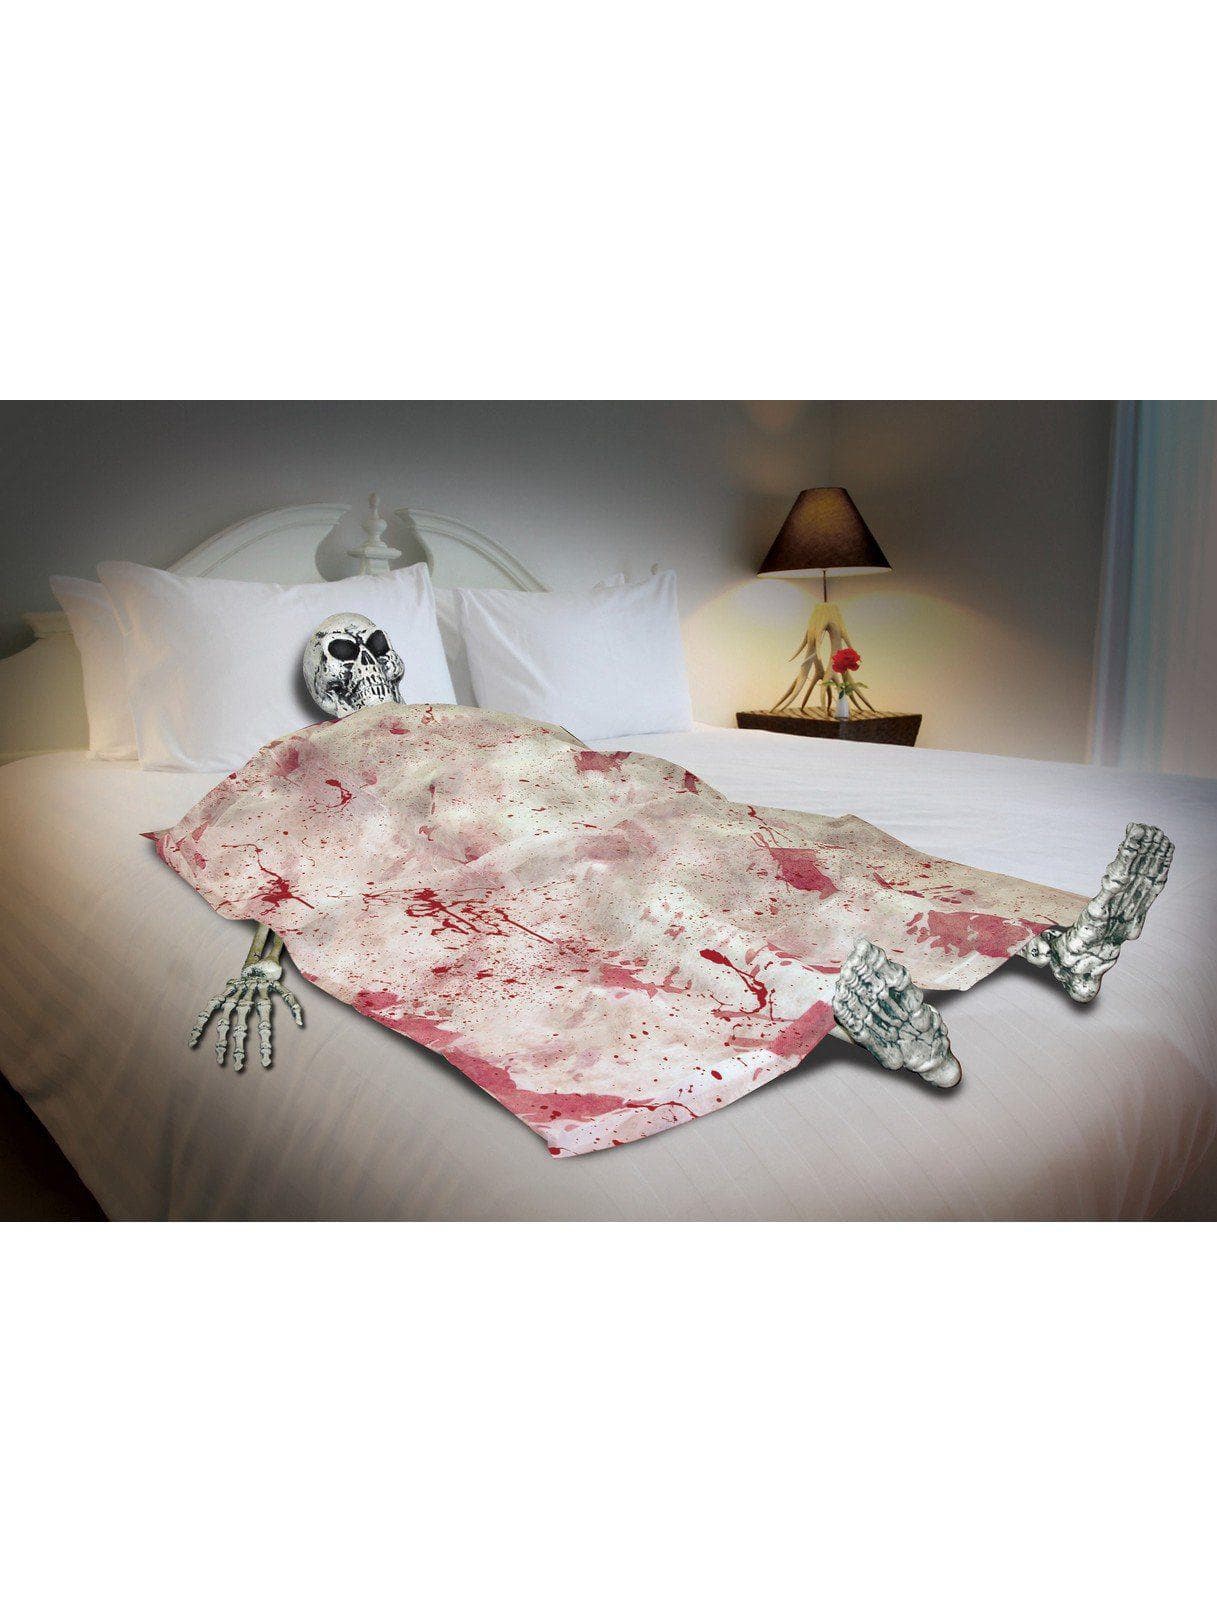 Lifesize Bloody Death Bed Skeleton Decoration - costumes.com